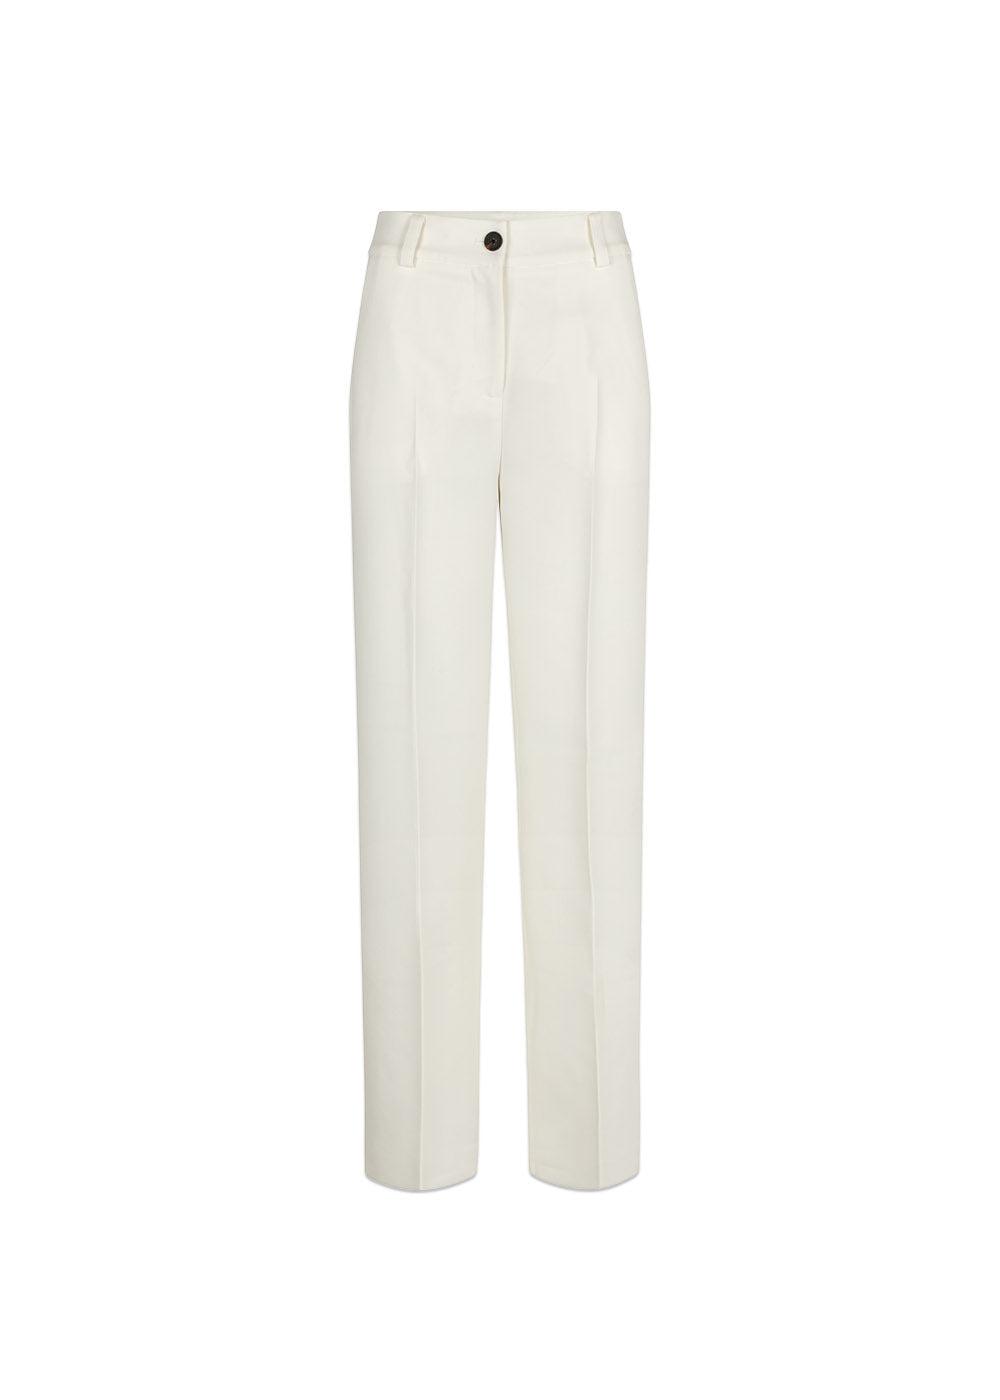 Gale pants - Soft White